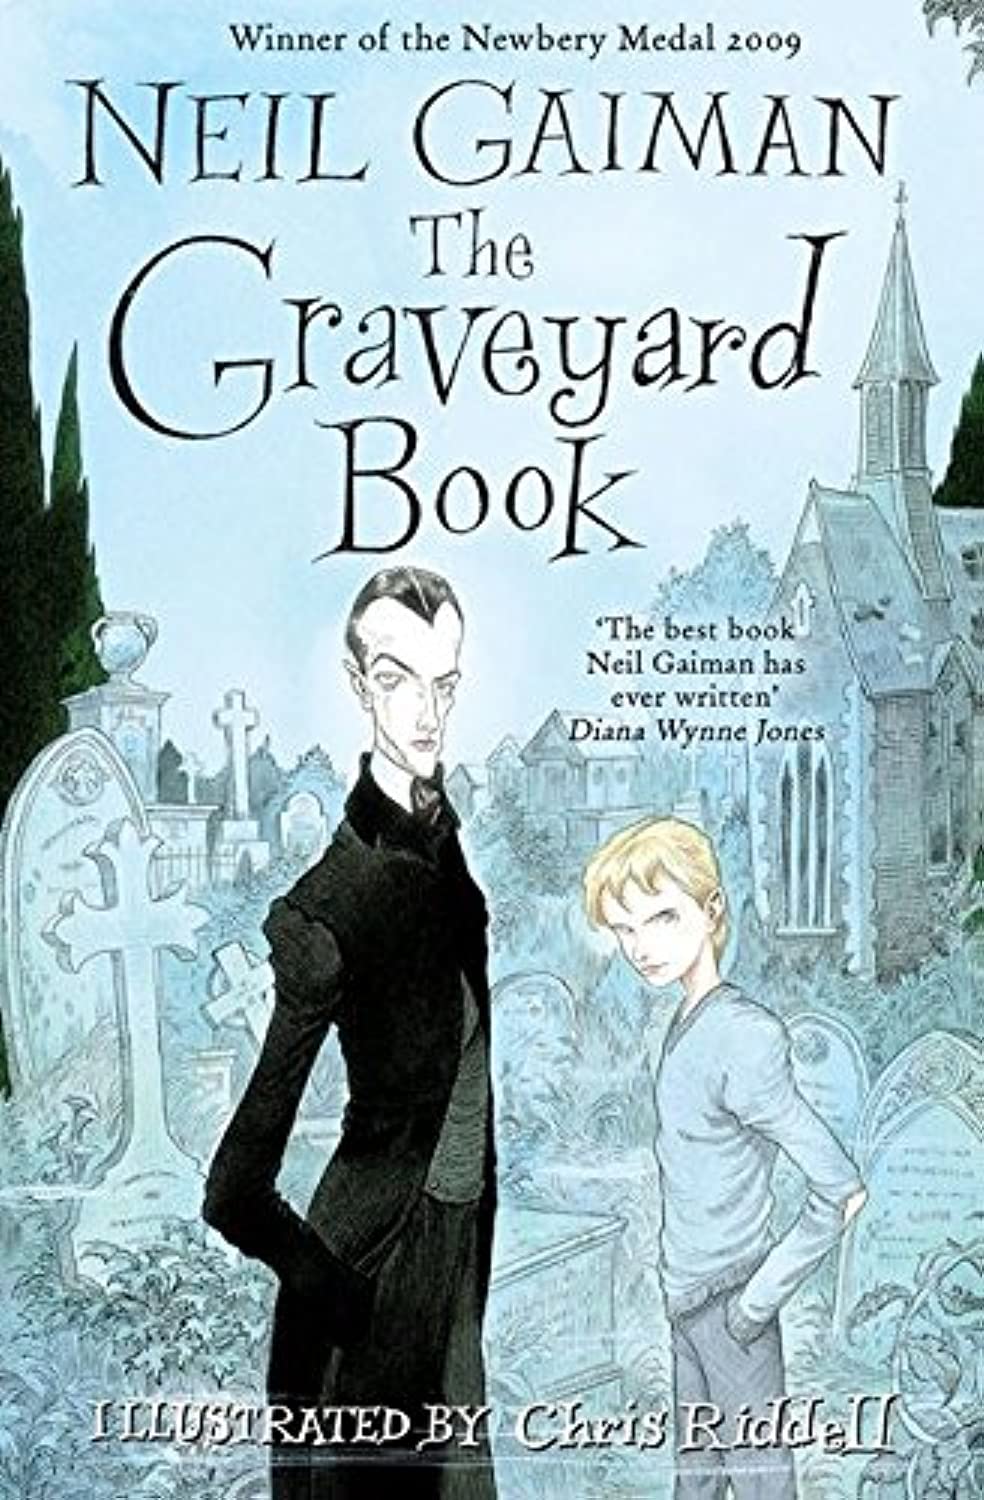 The Graveyard Book by Neil Gaiman - Vocabulary